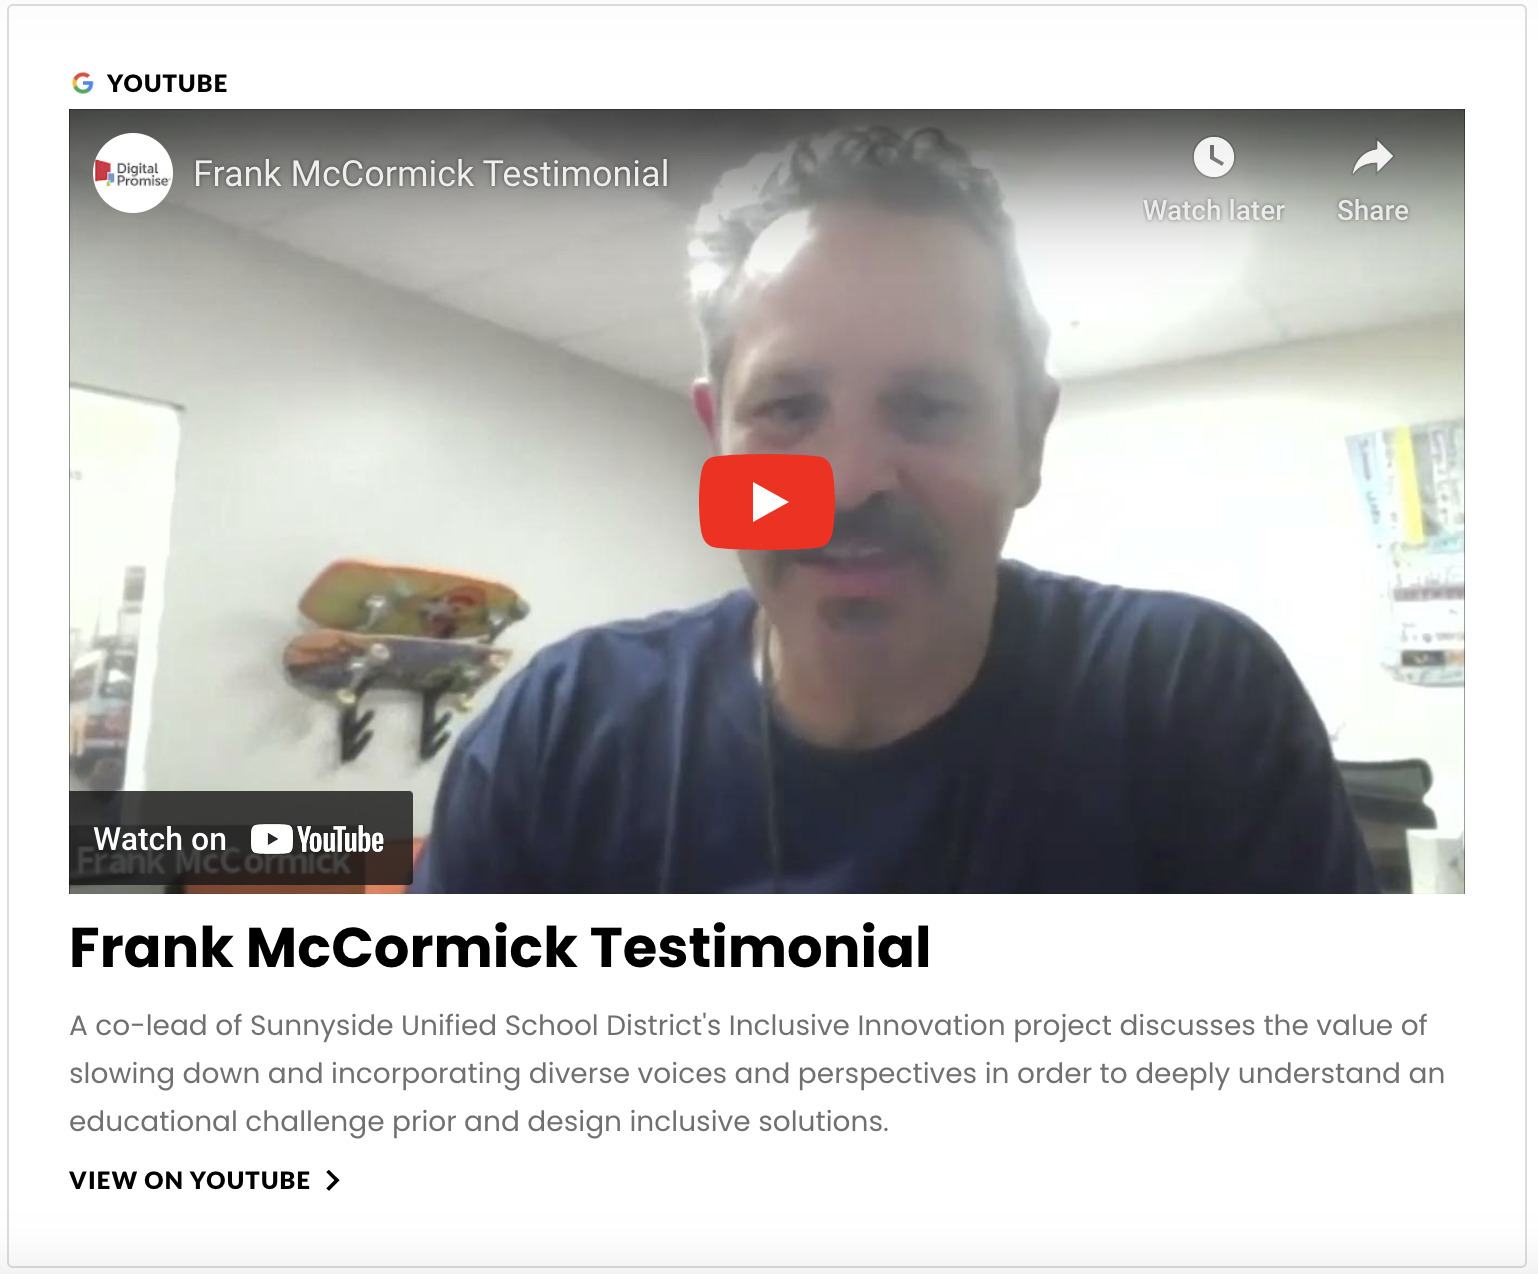 Frank McCormick Testimonial